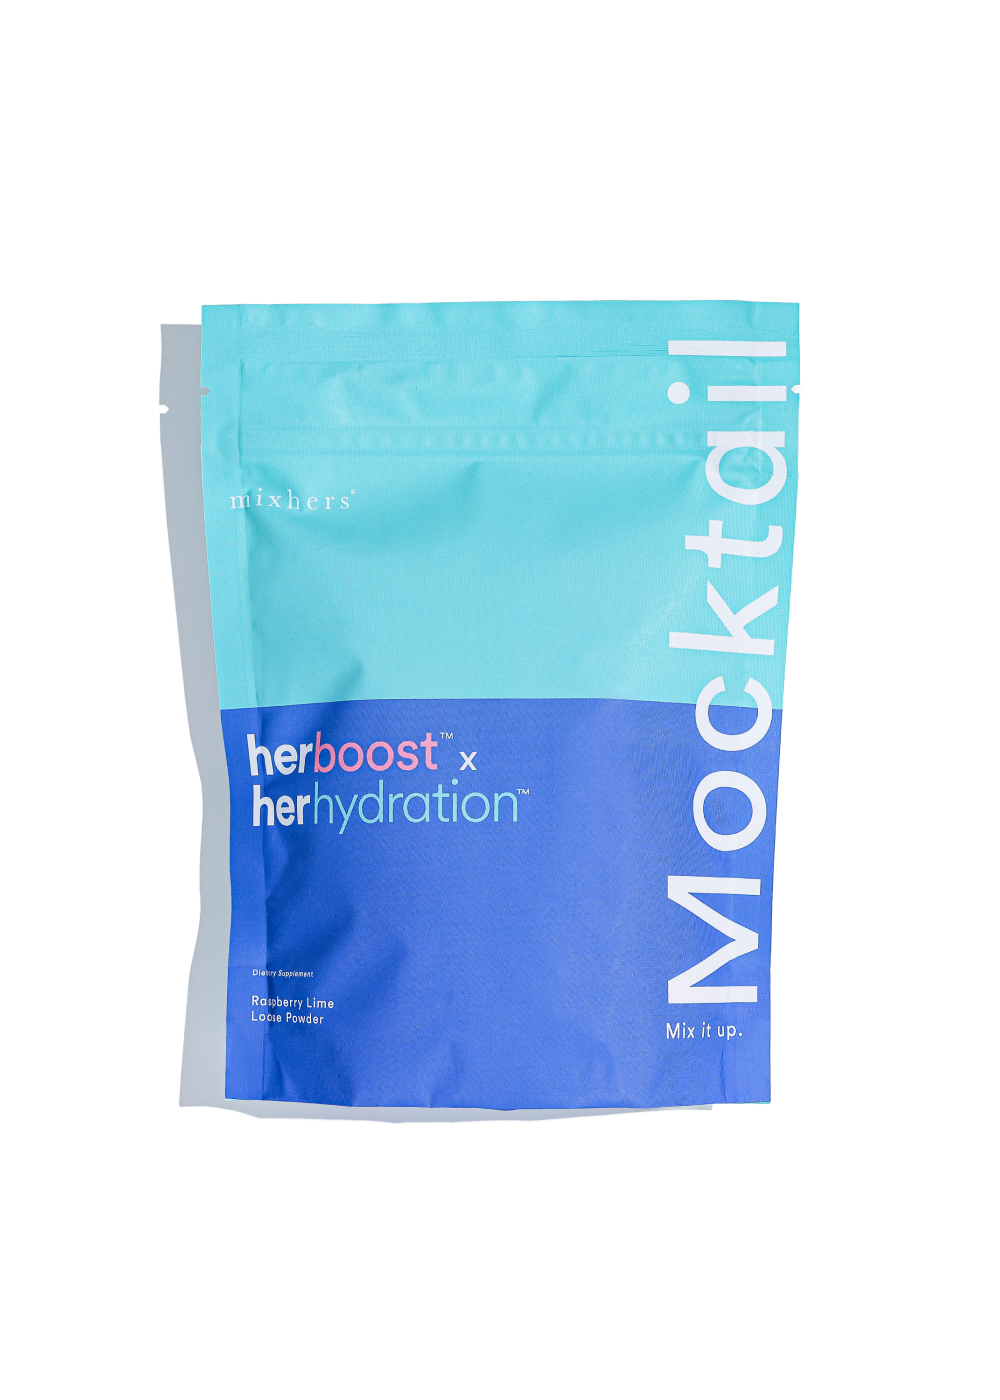 herboost x herhydration image 1